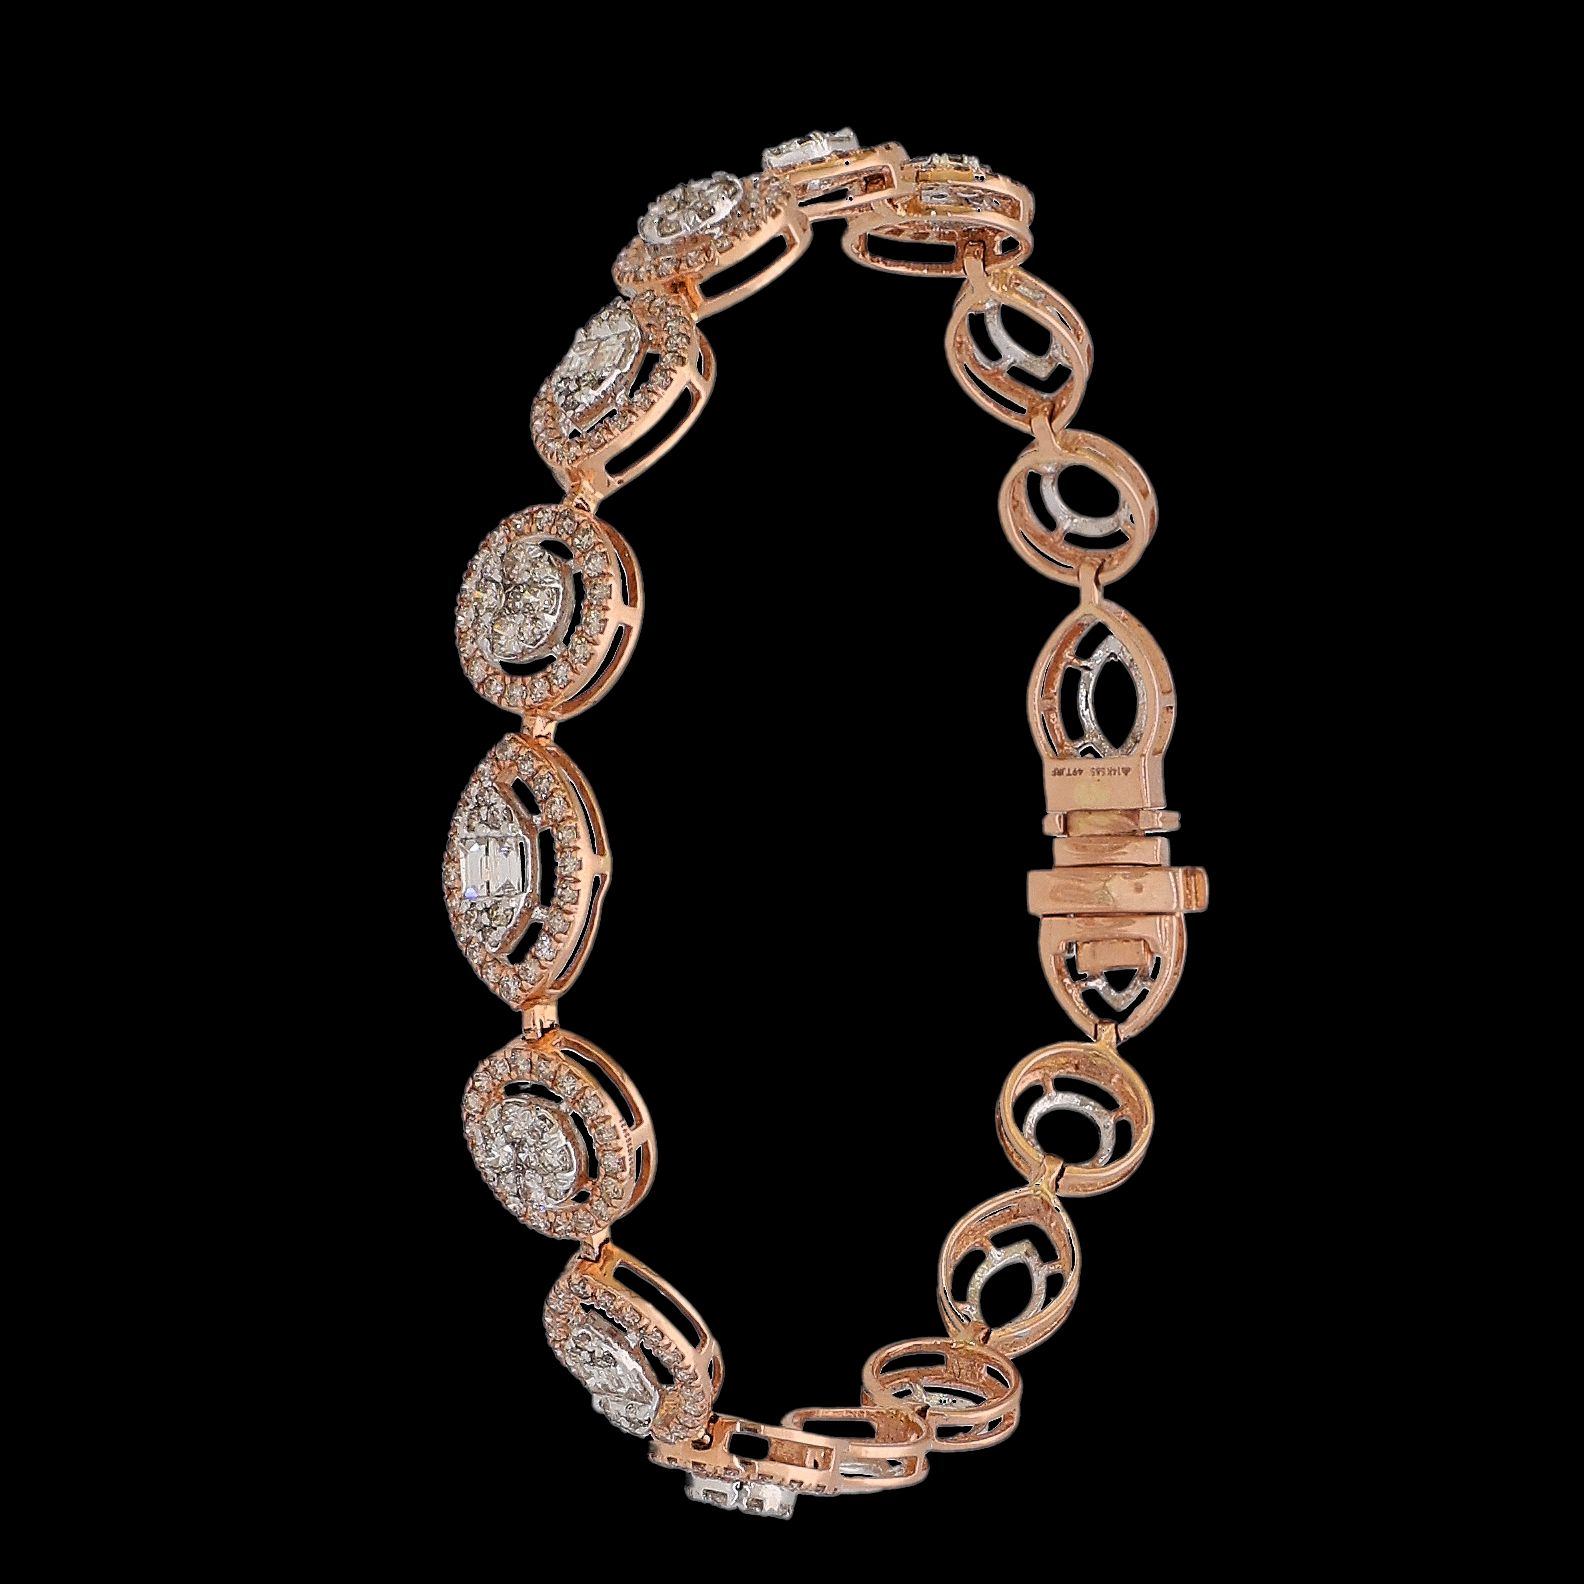 Jagdish Jewellers | Buy Traditional Bangles & Bracelets Online